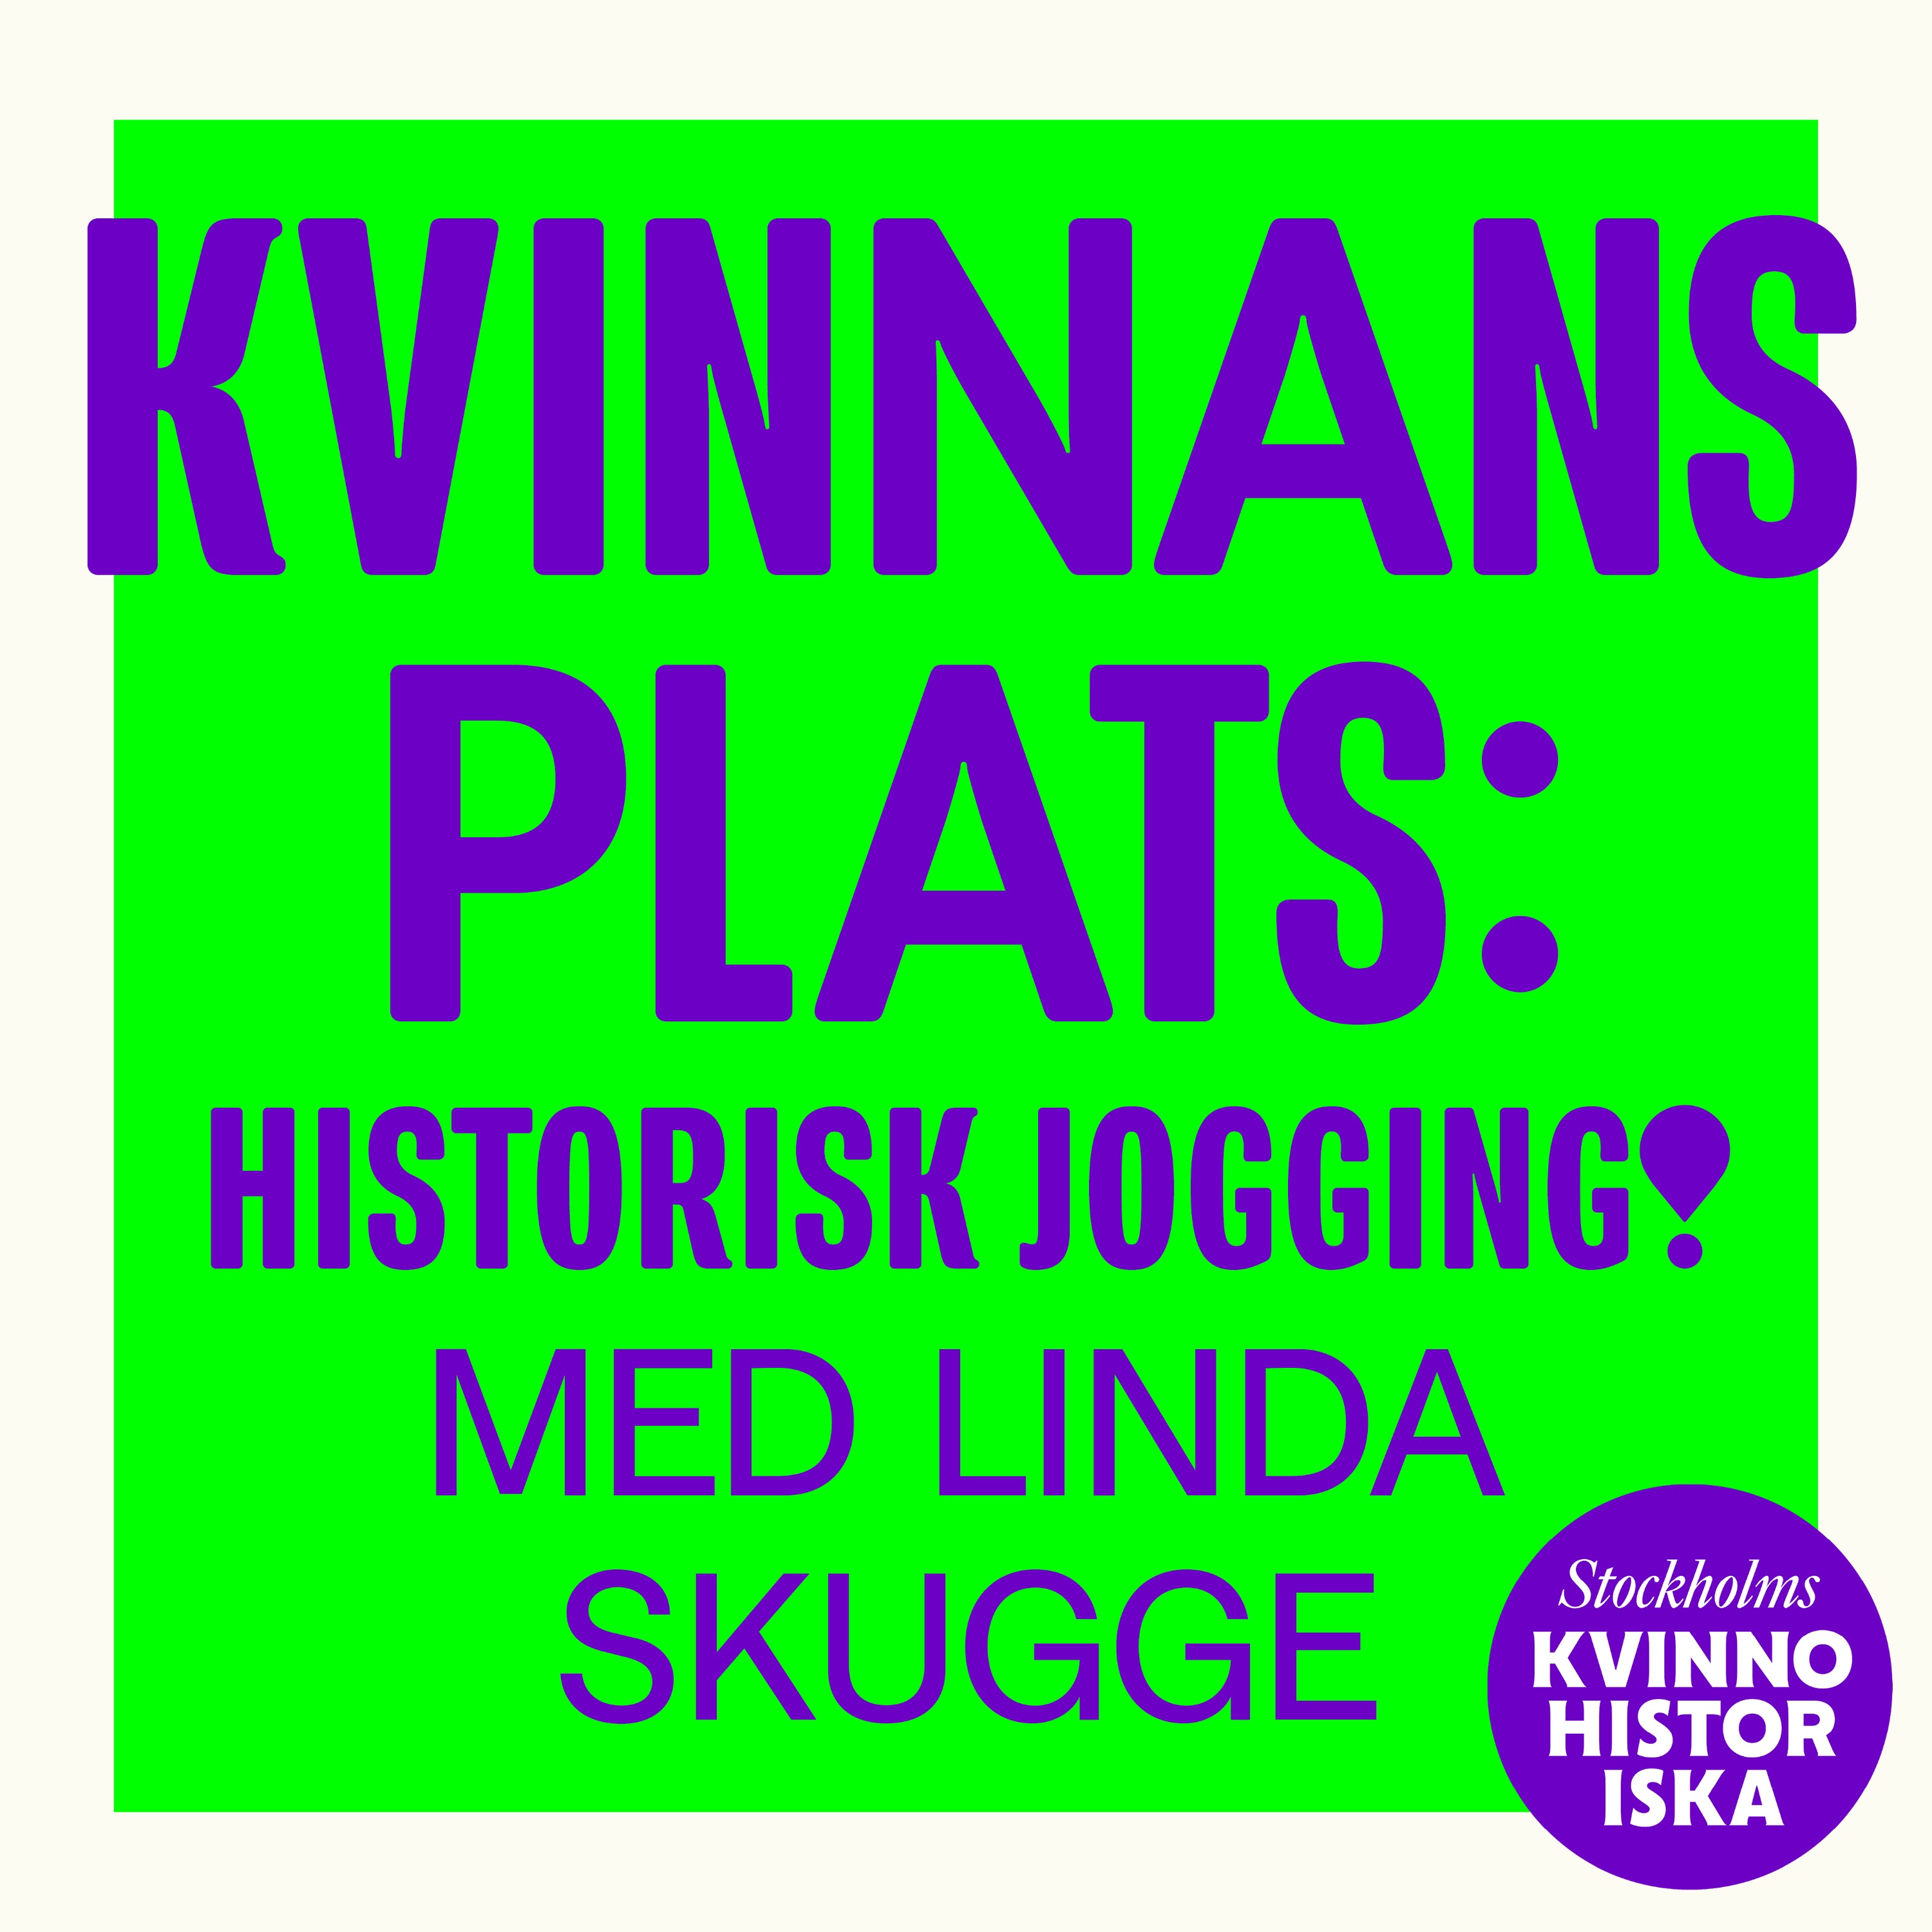 Historisk jogging (Gröna Lund—Slussen)! Med Linda Skugge